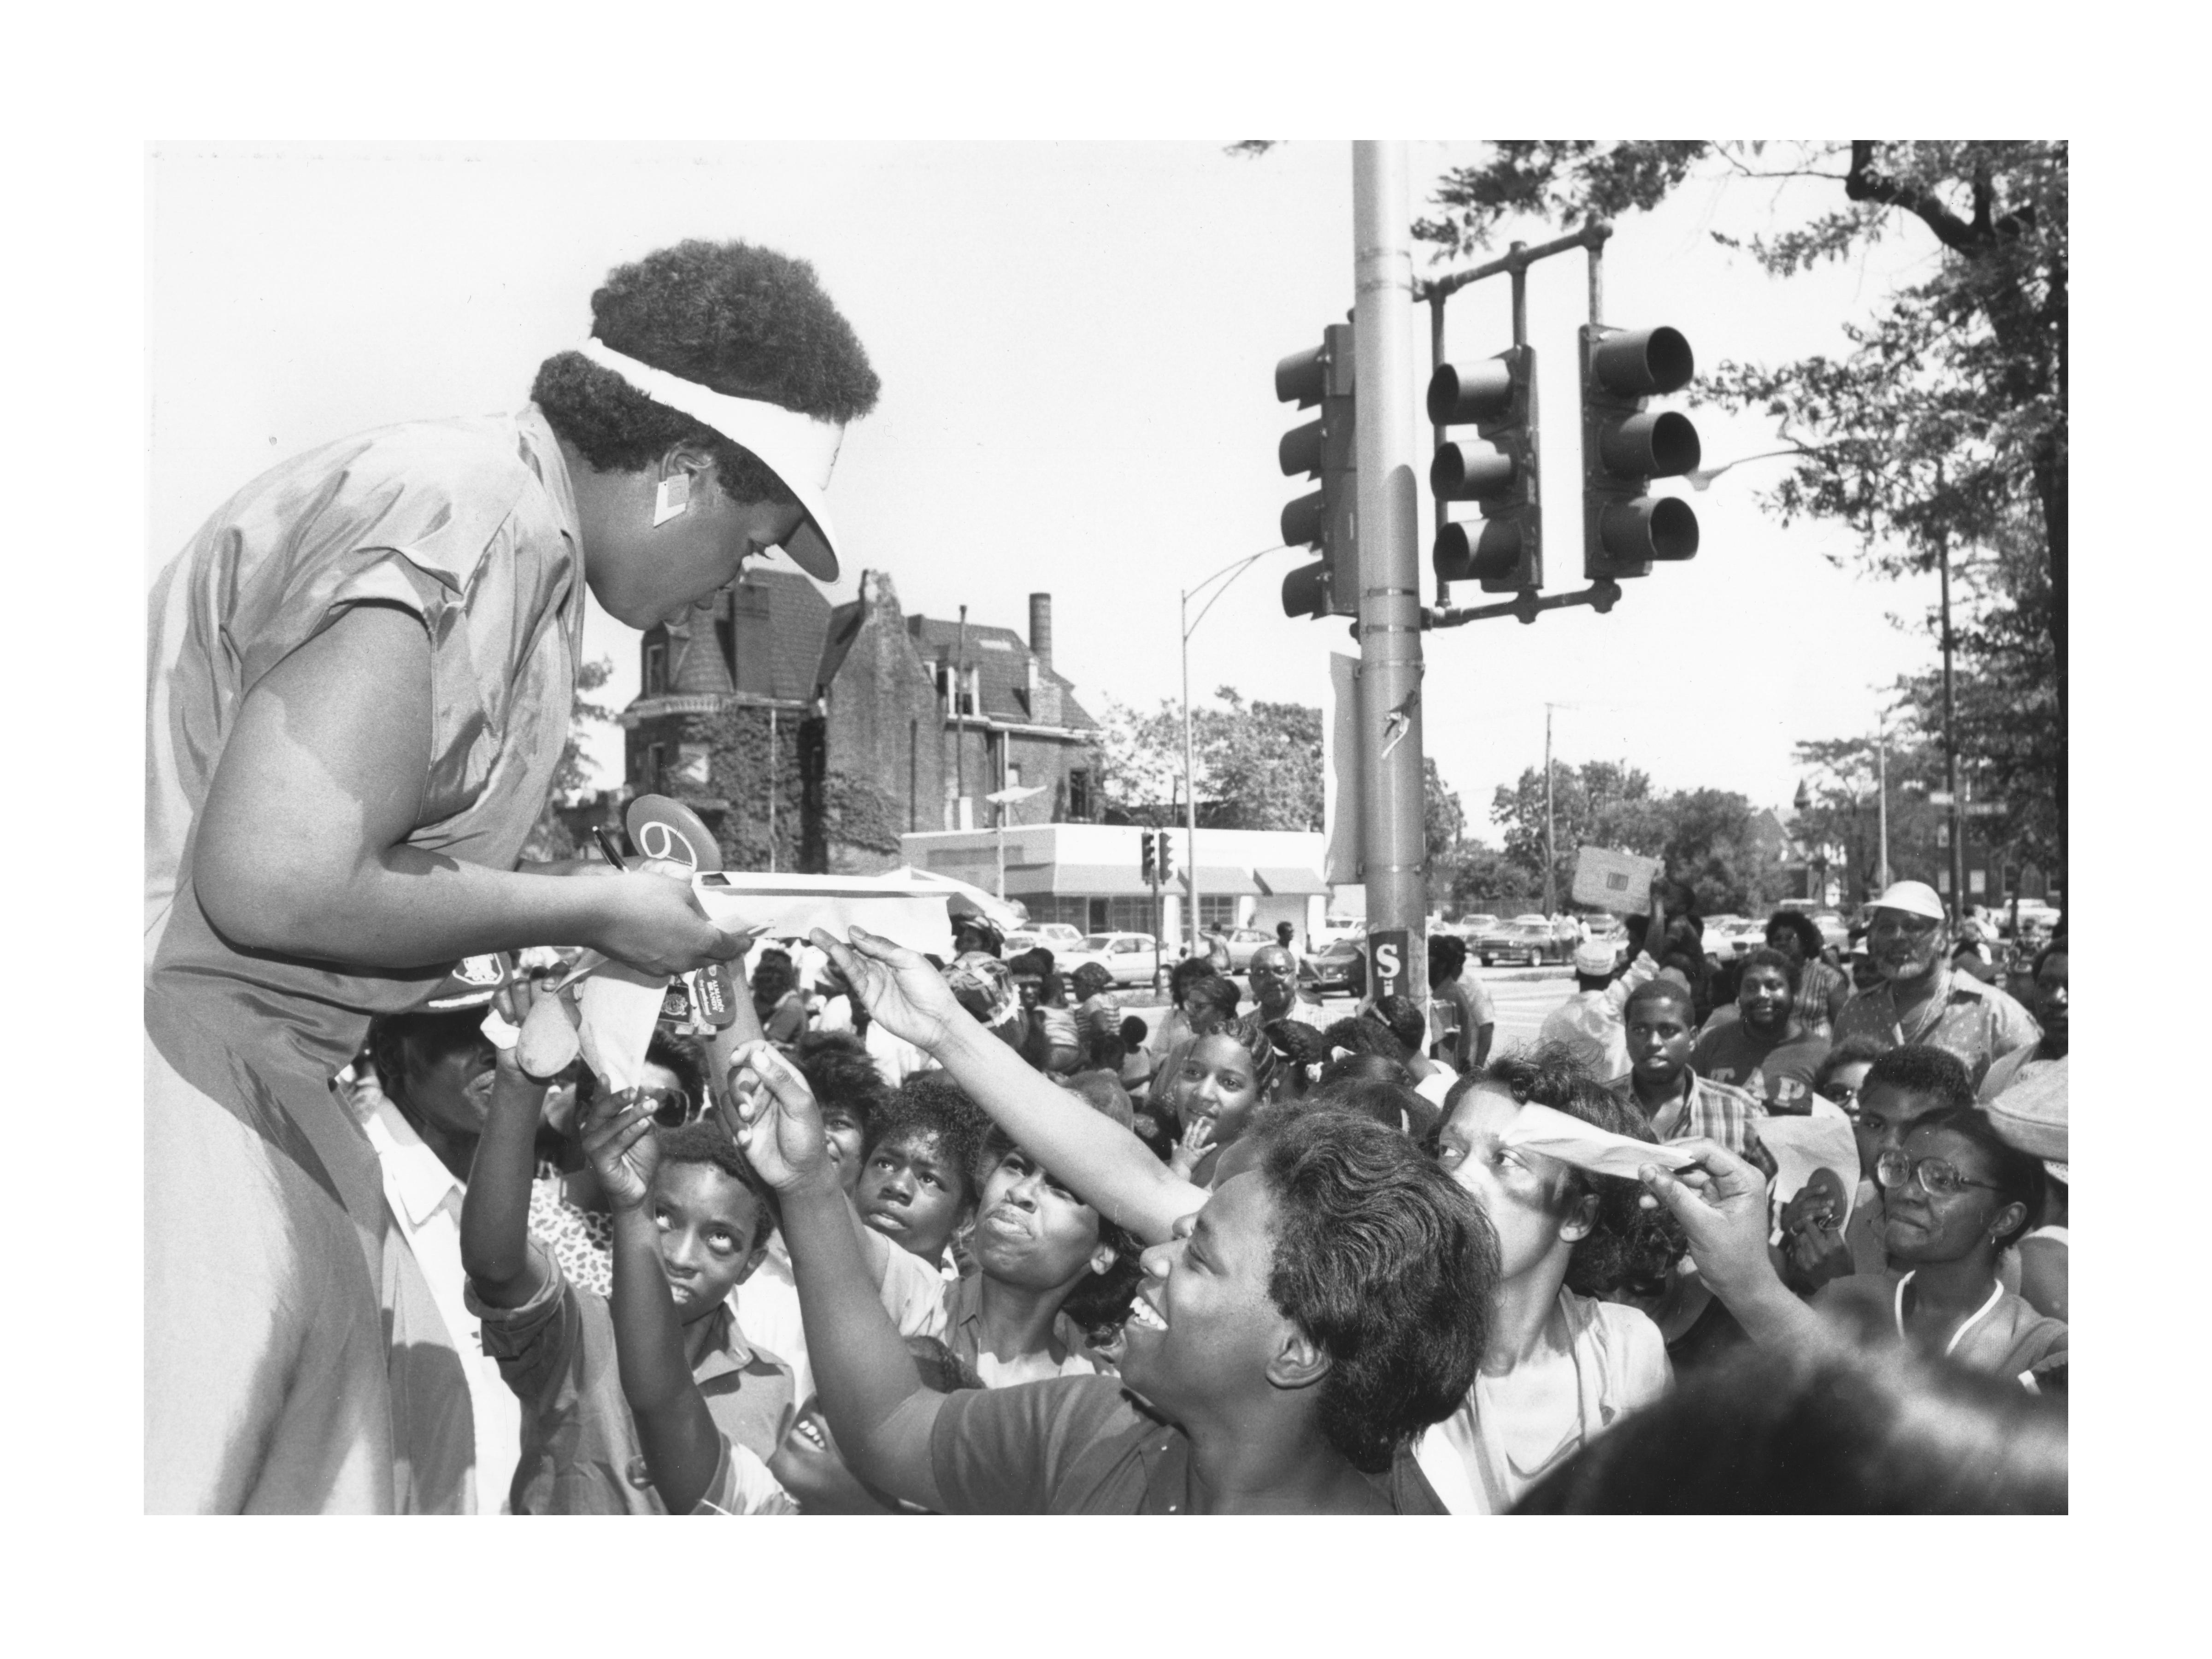 Richard Shay Portrait Photograph - Oprah Winfrey at the Bud Billiken Parade in Chicago, 1984 - Black & White Photo